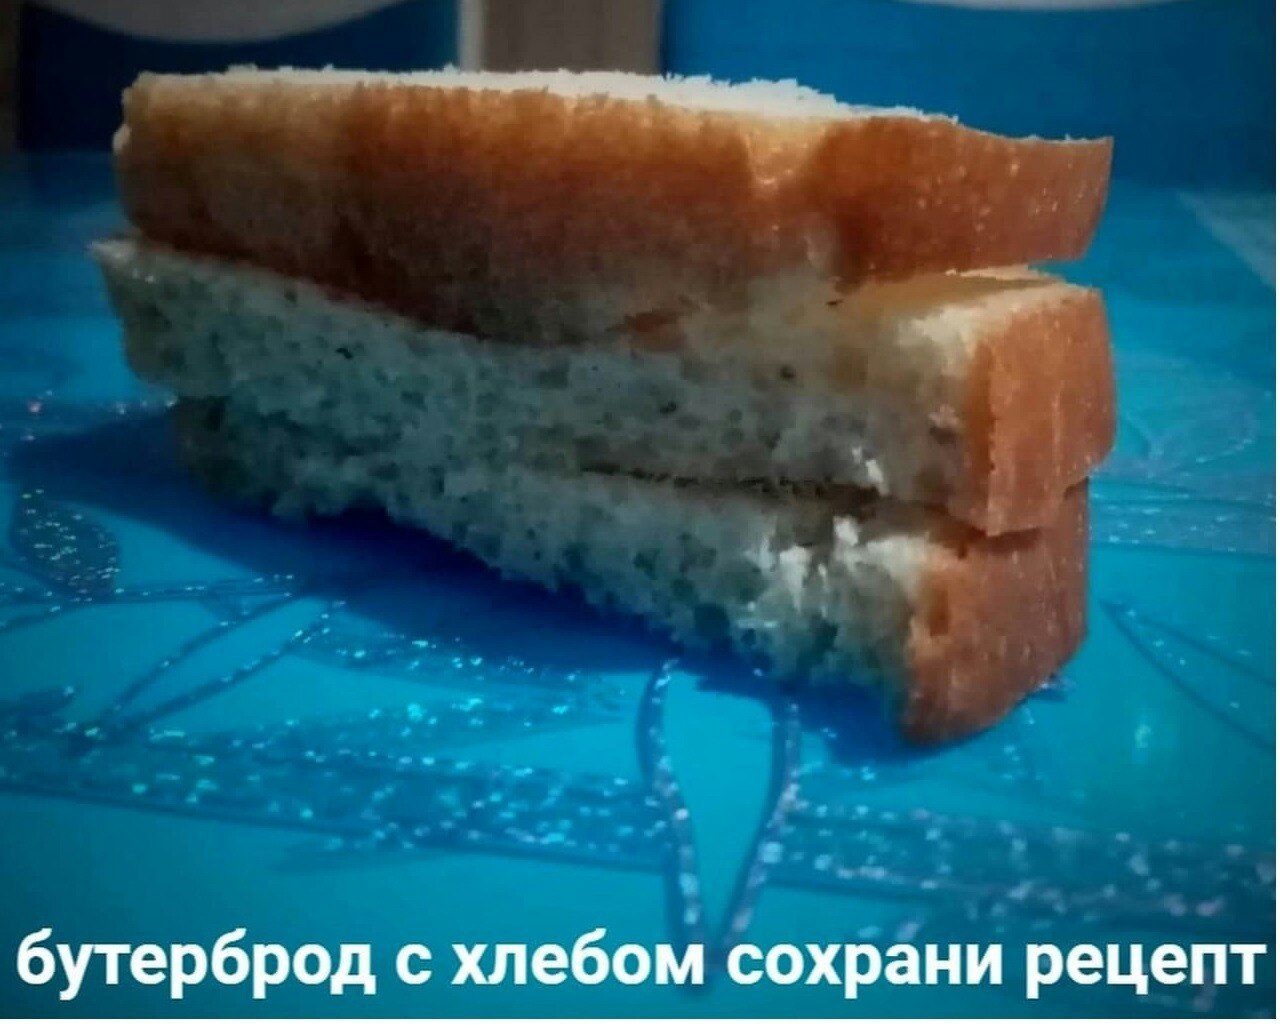 бутерброд с хлебом Ьохрани рецейт